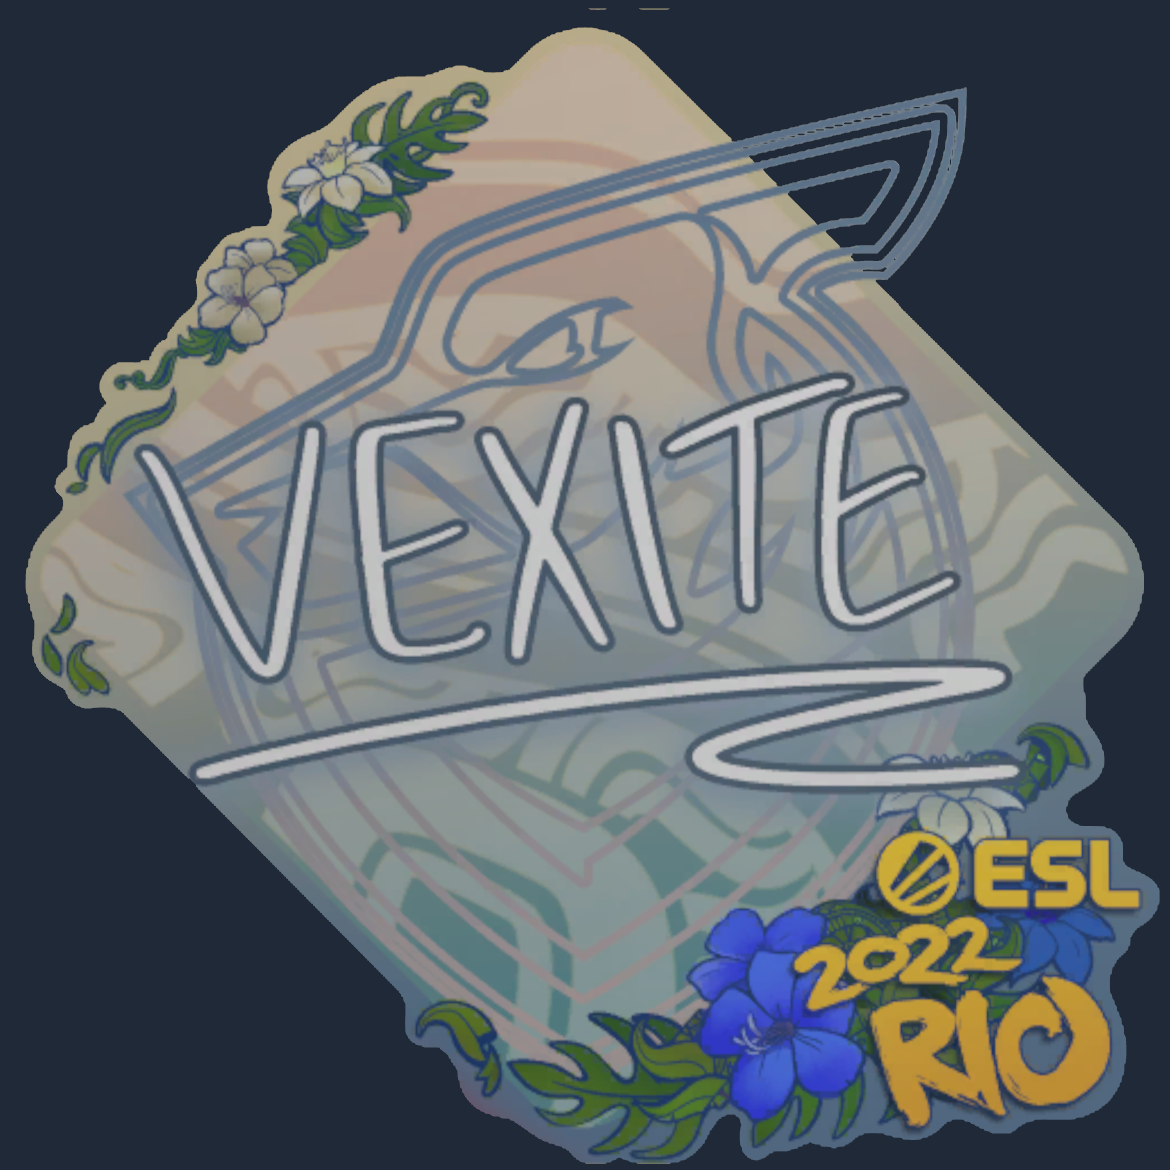 Sticker | vexite | Rio 2022 Screenshot